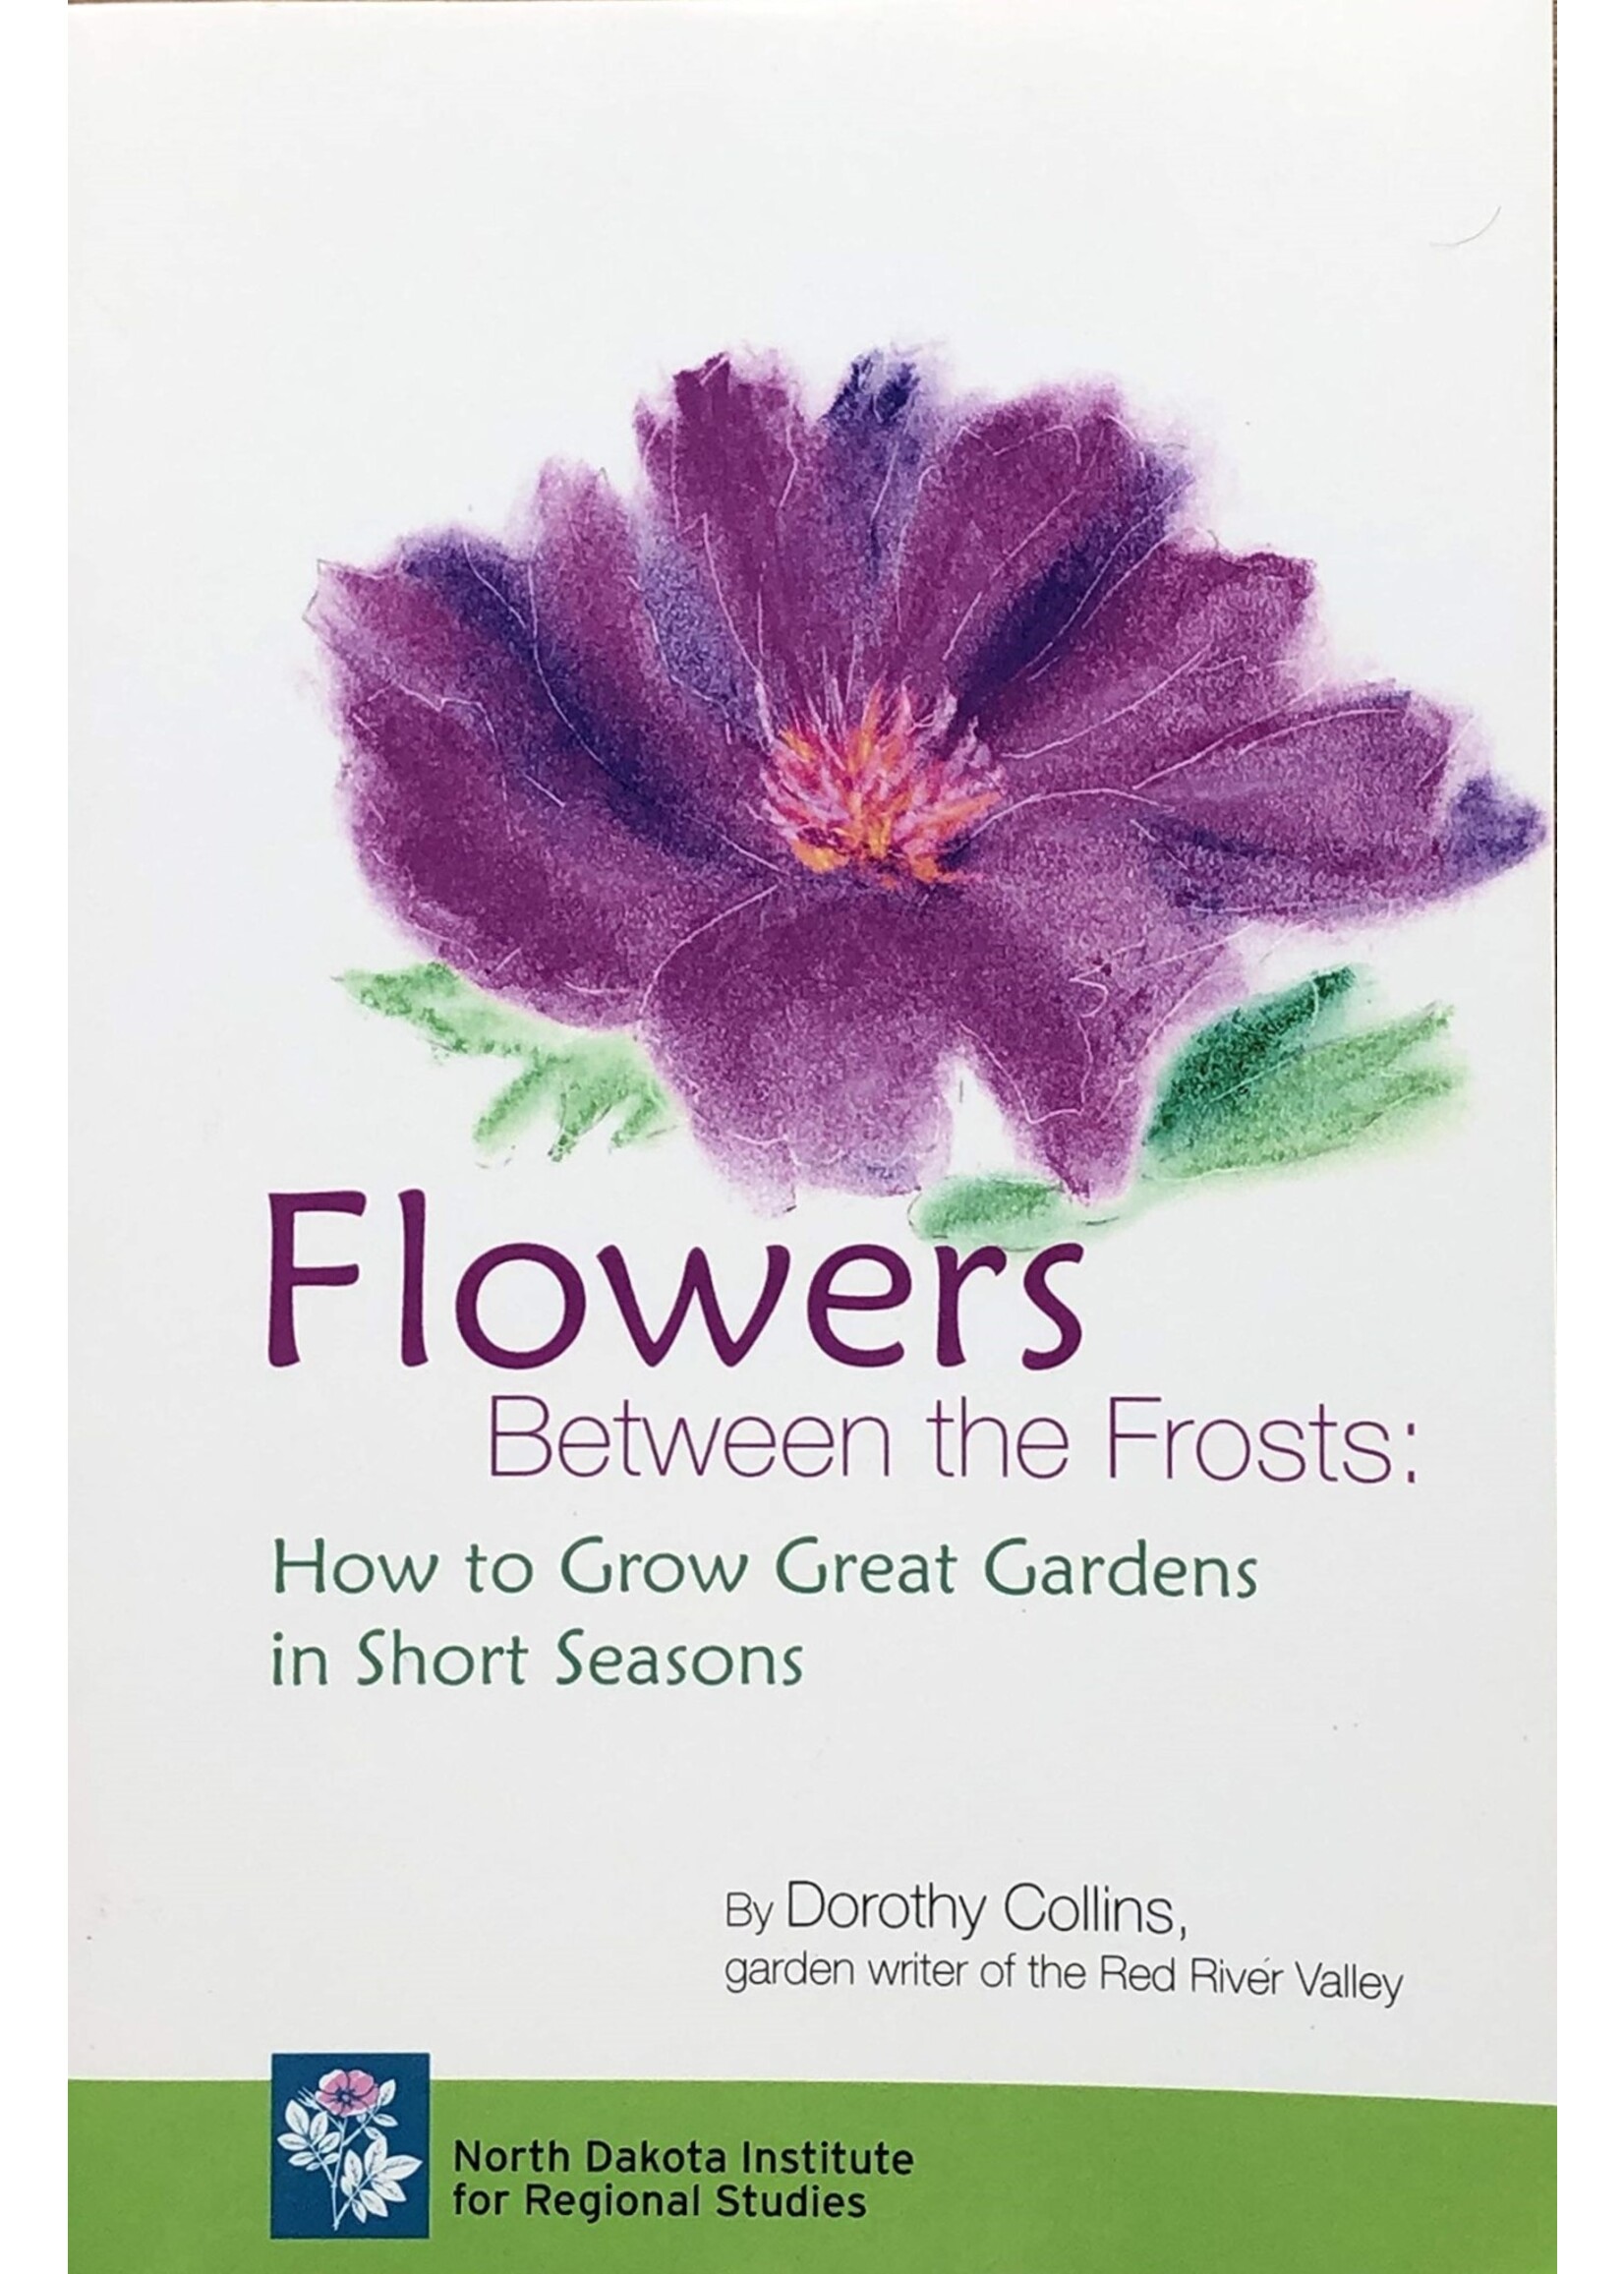 Flowers Between the Frosts: How to Grow Great Gardens in Short Seasons